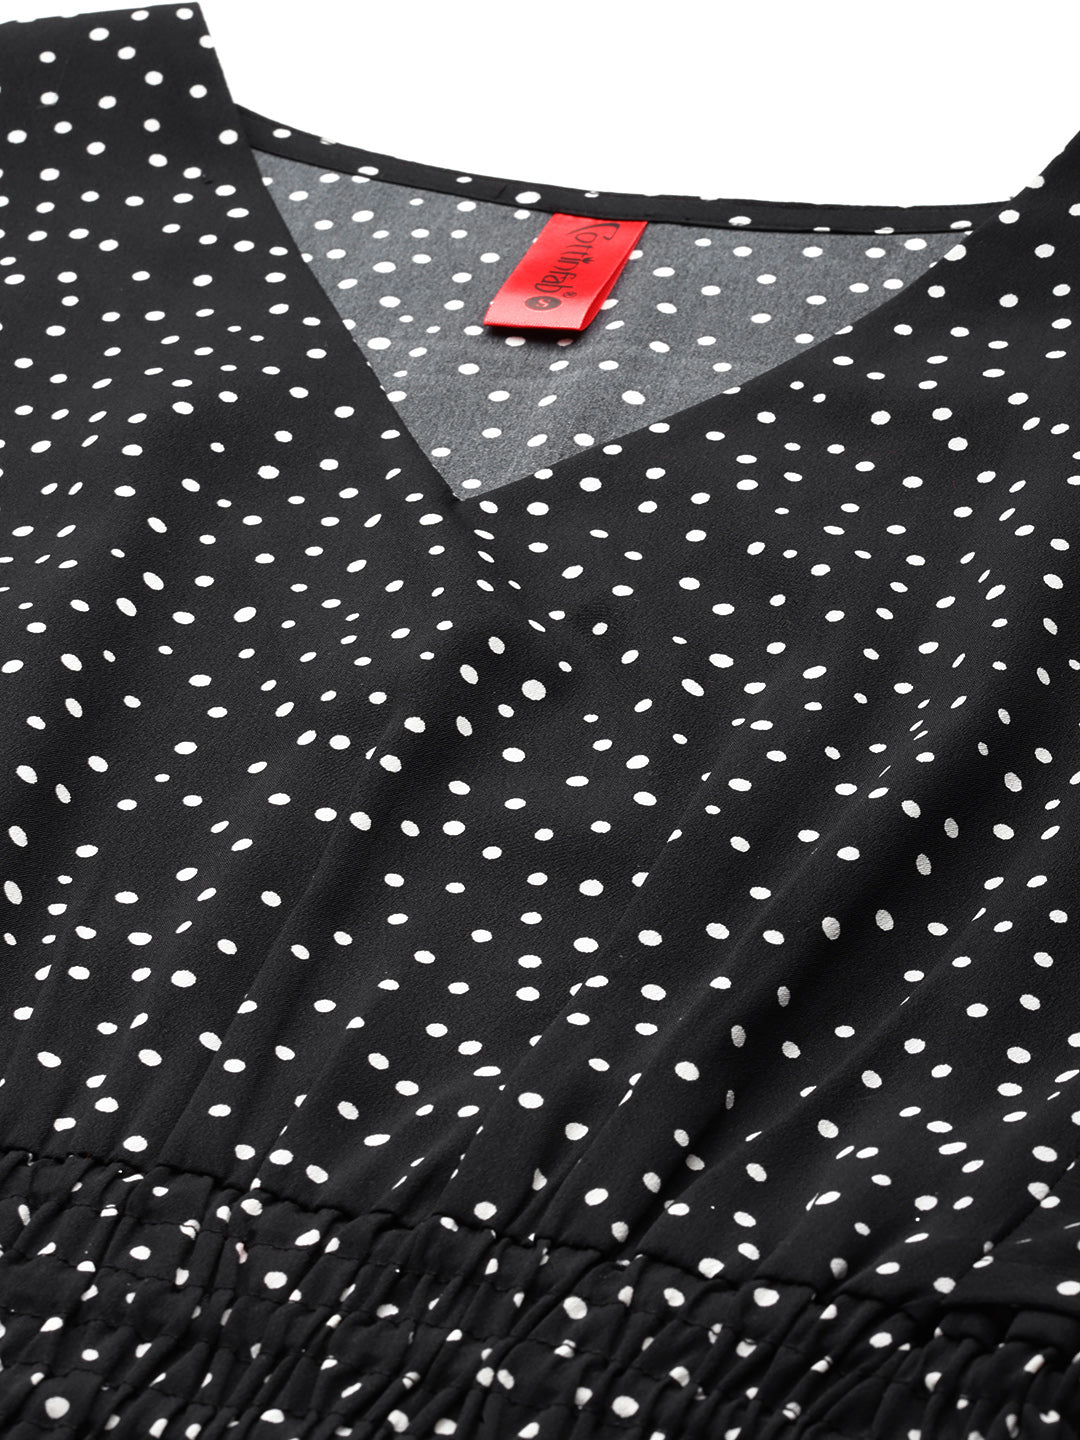 Cottinfab Women Polka Dot Print Flared Sleeve Crepe A-Line Midi Dress